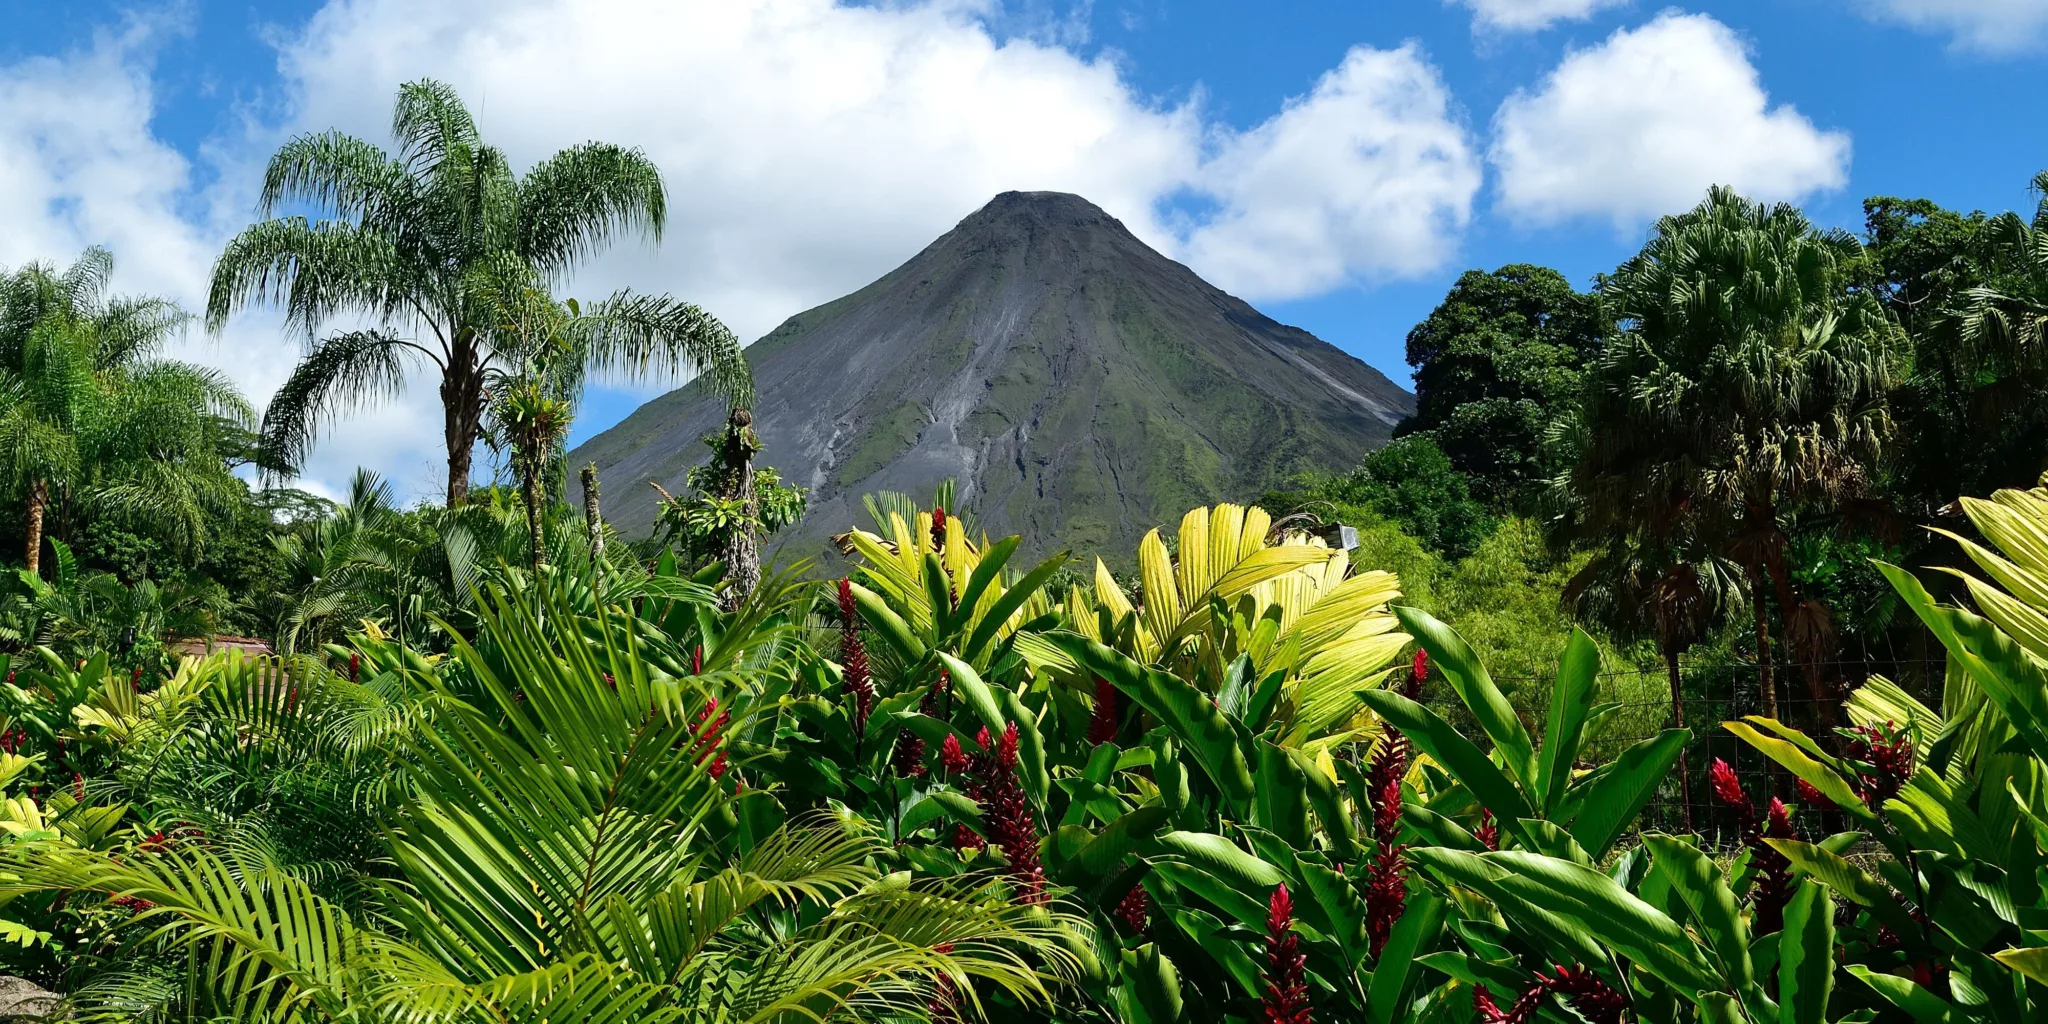 A volcano rising above a jungle.